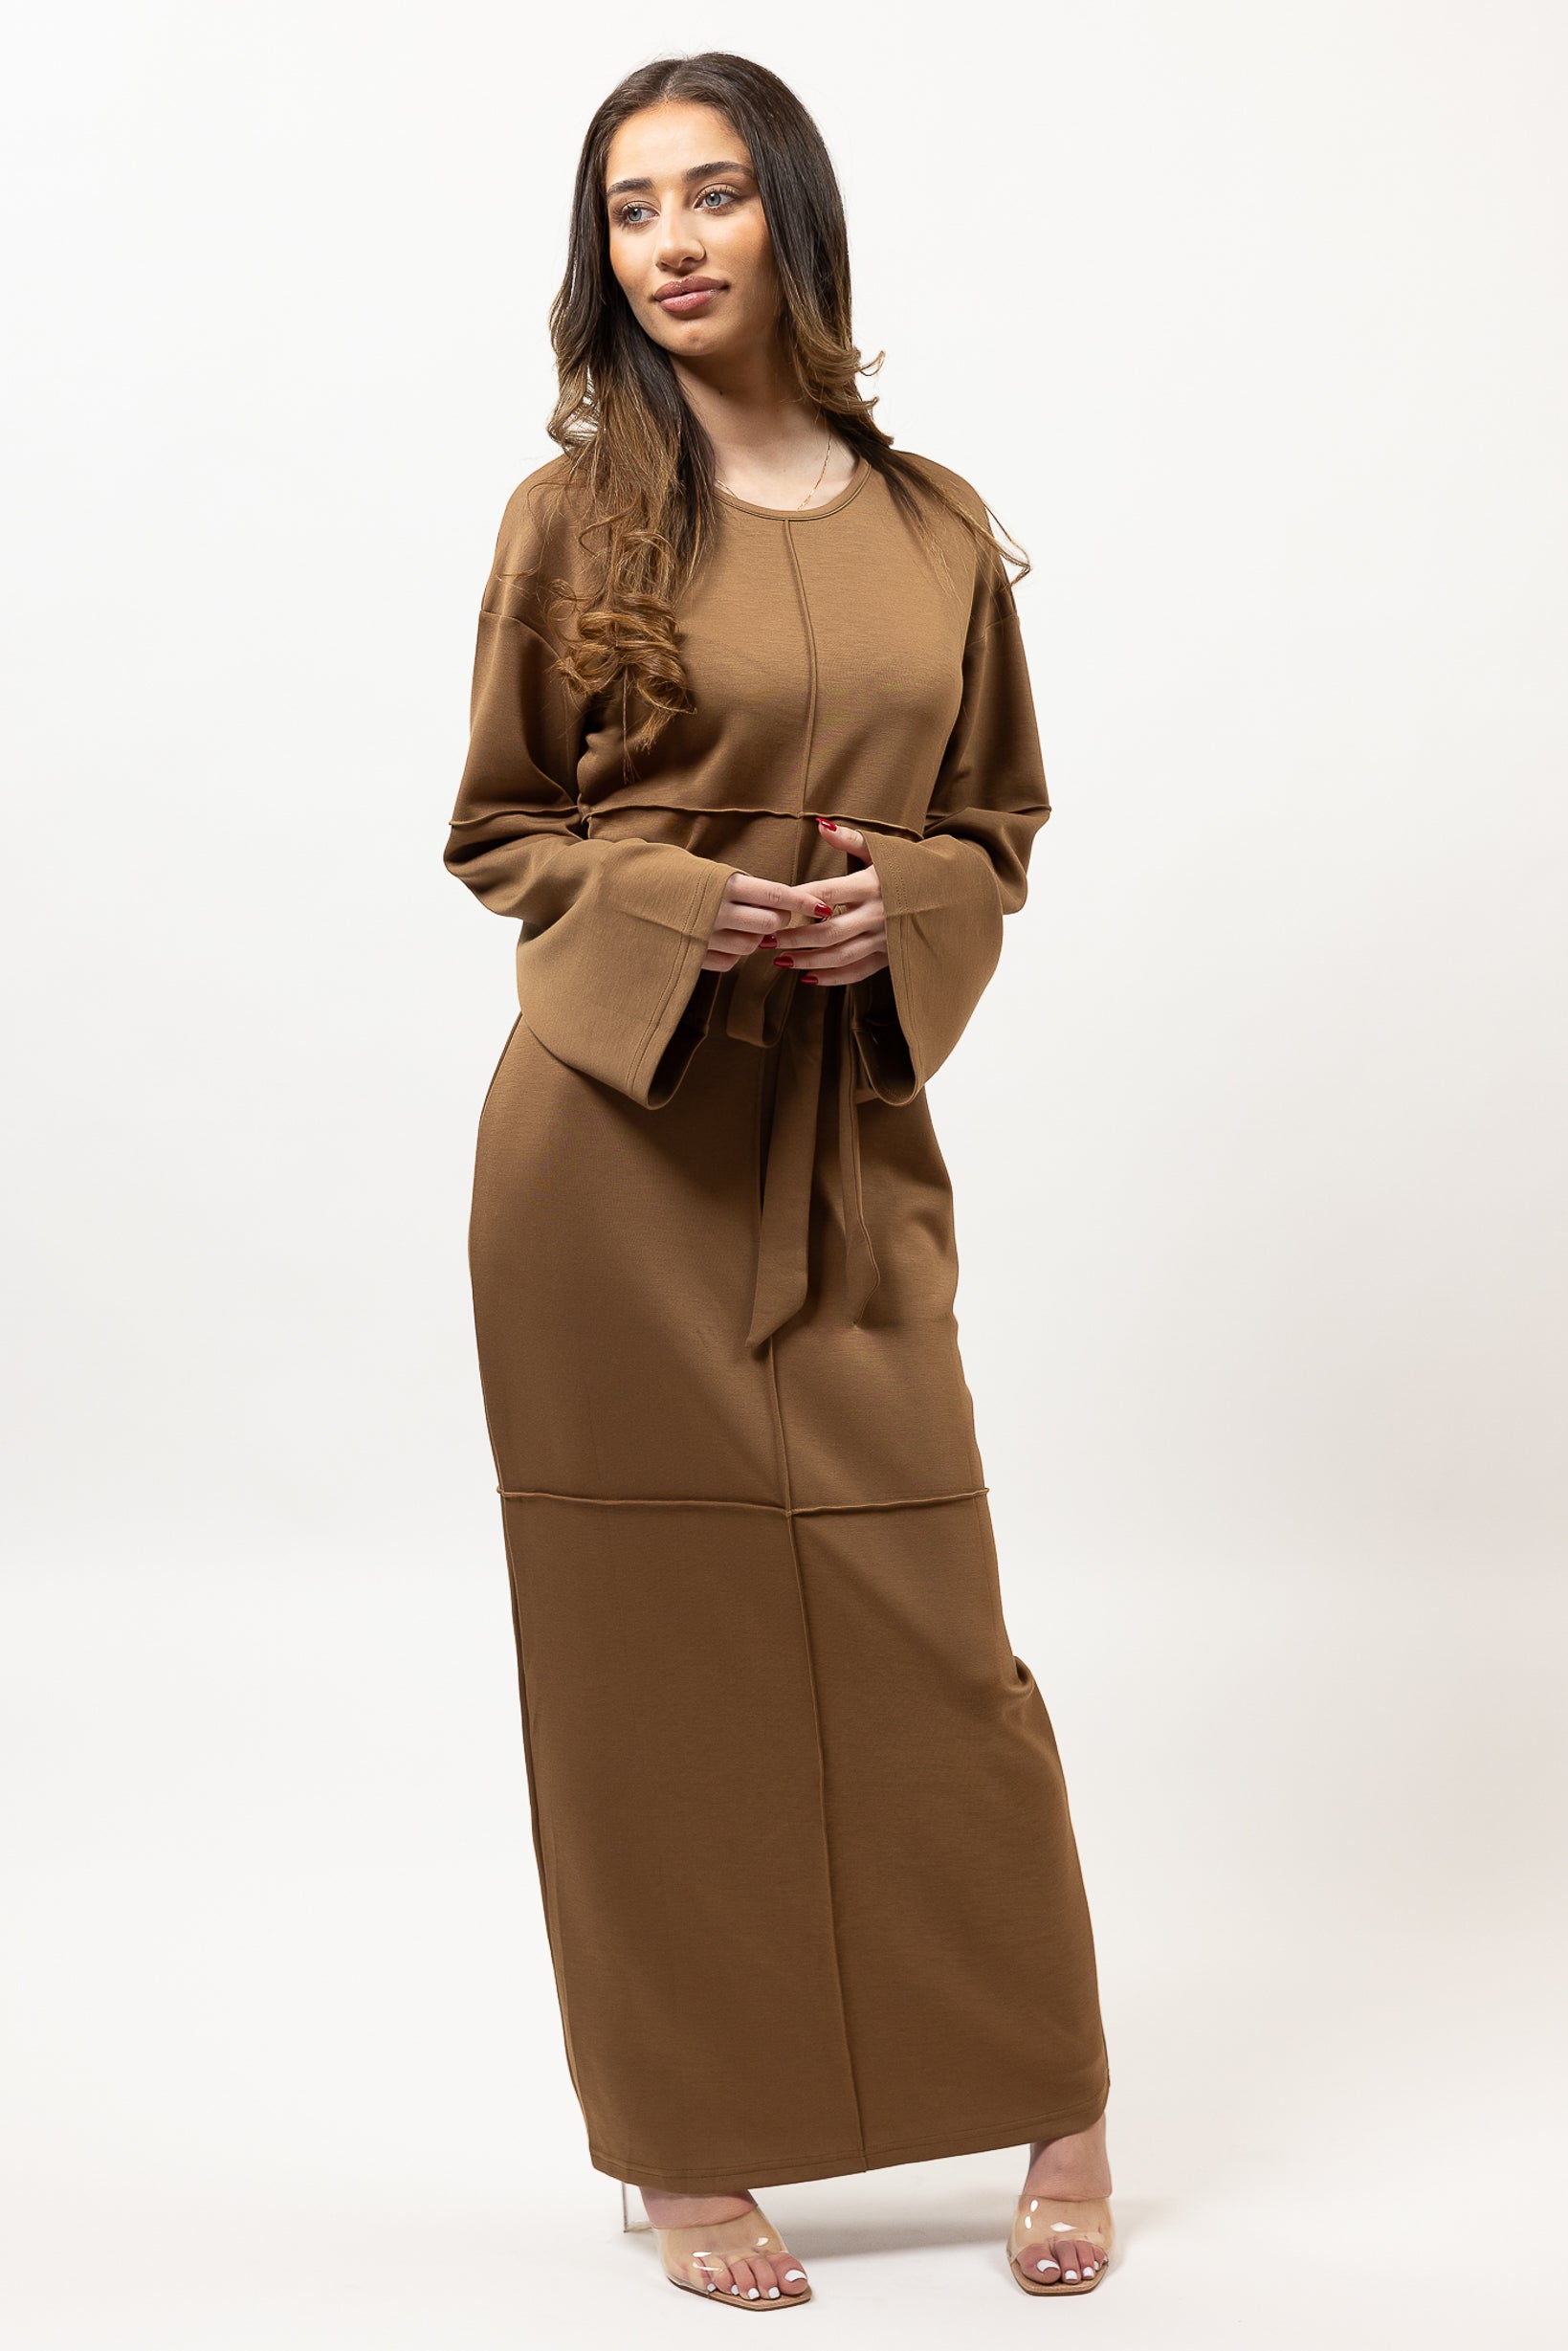 M8266Chocolate-dress-abaya